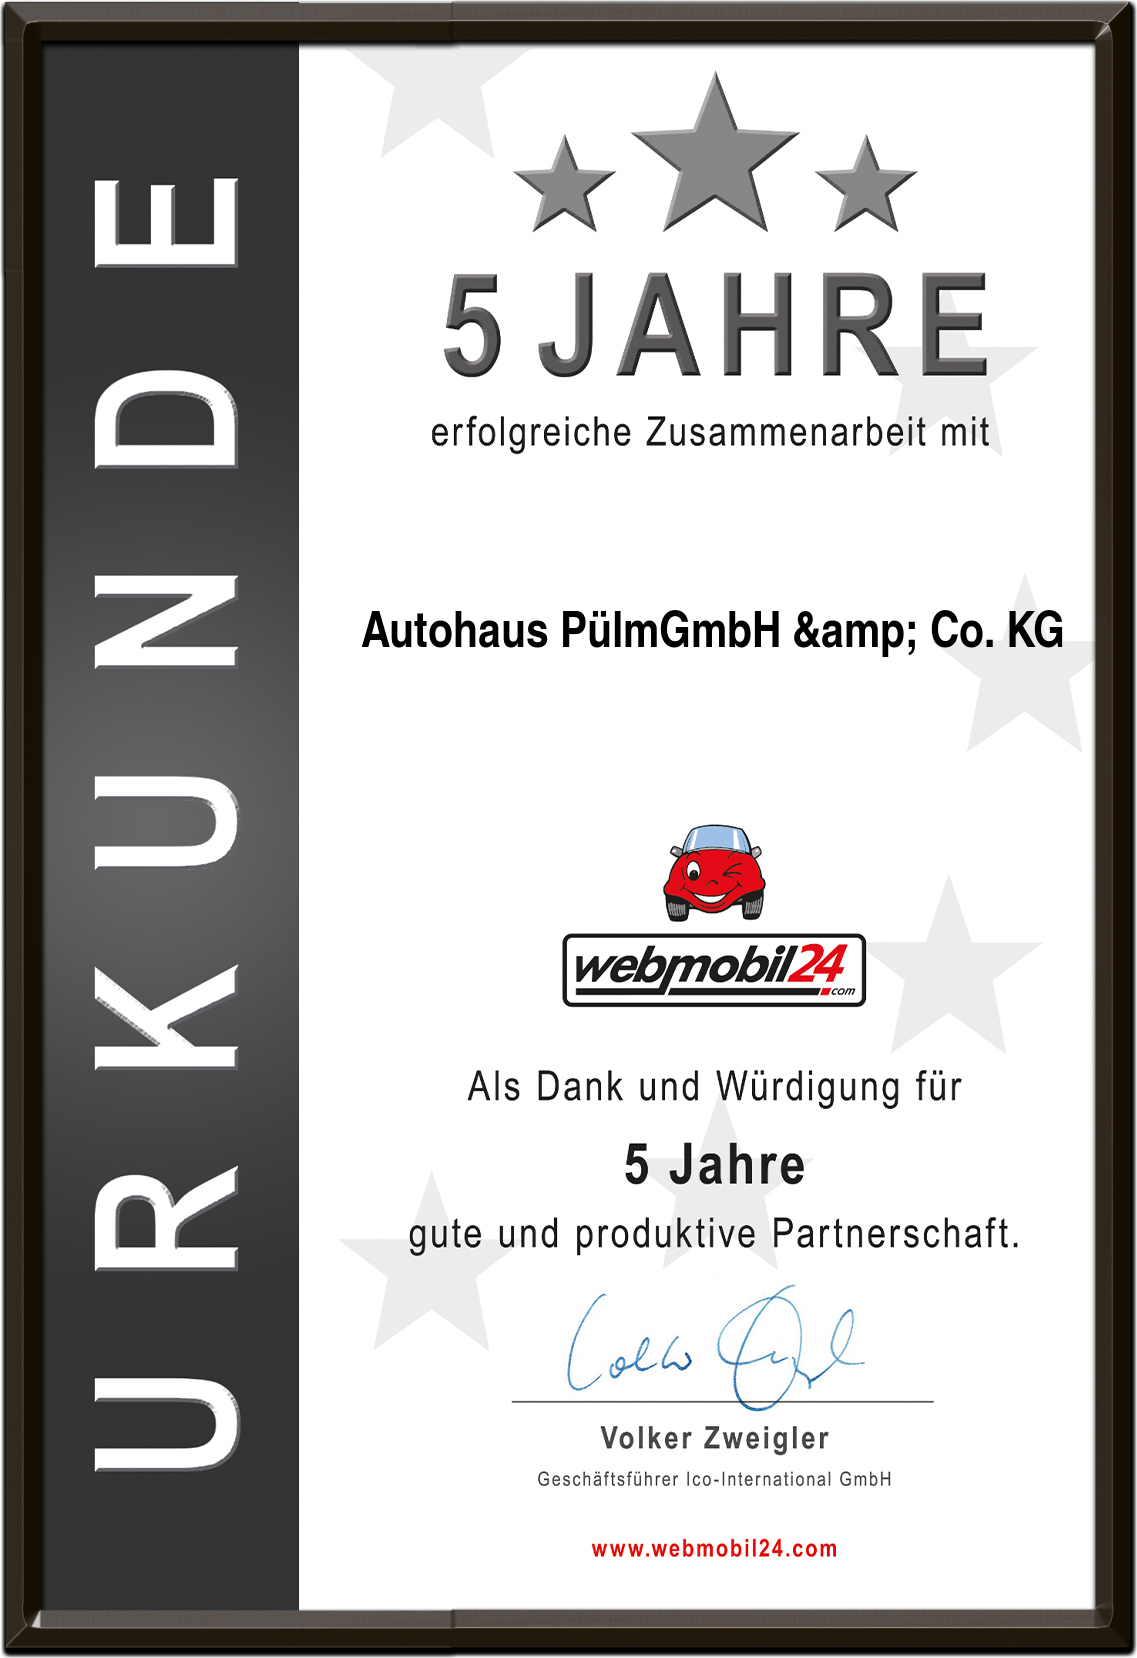 Autohaus PülmGmbH & Co. KG